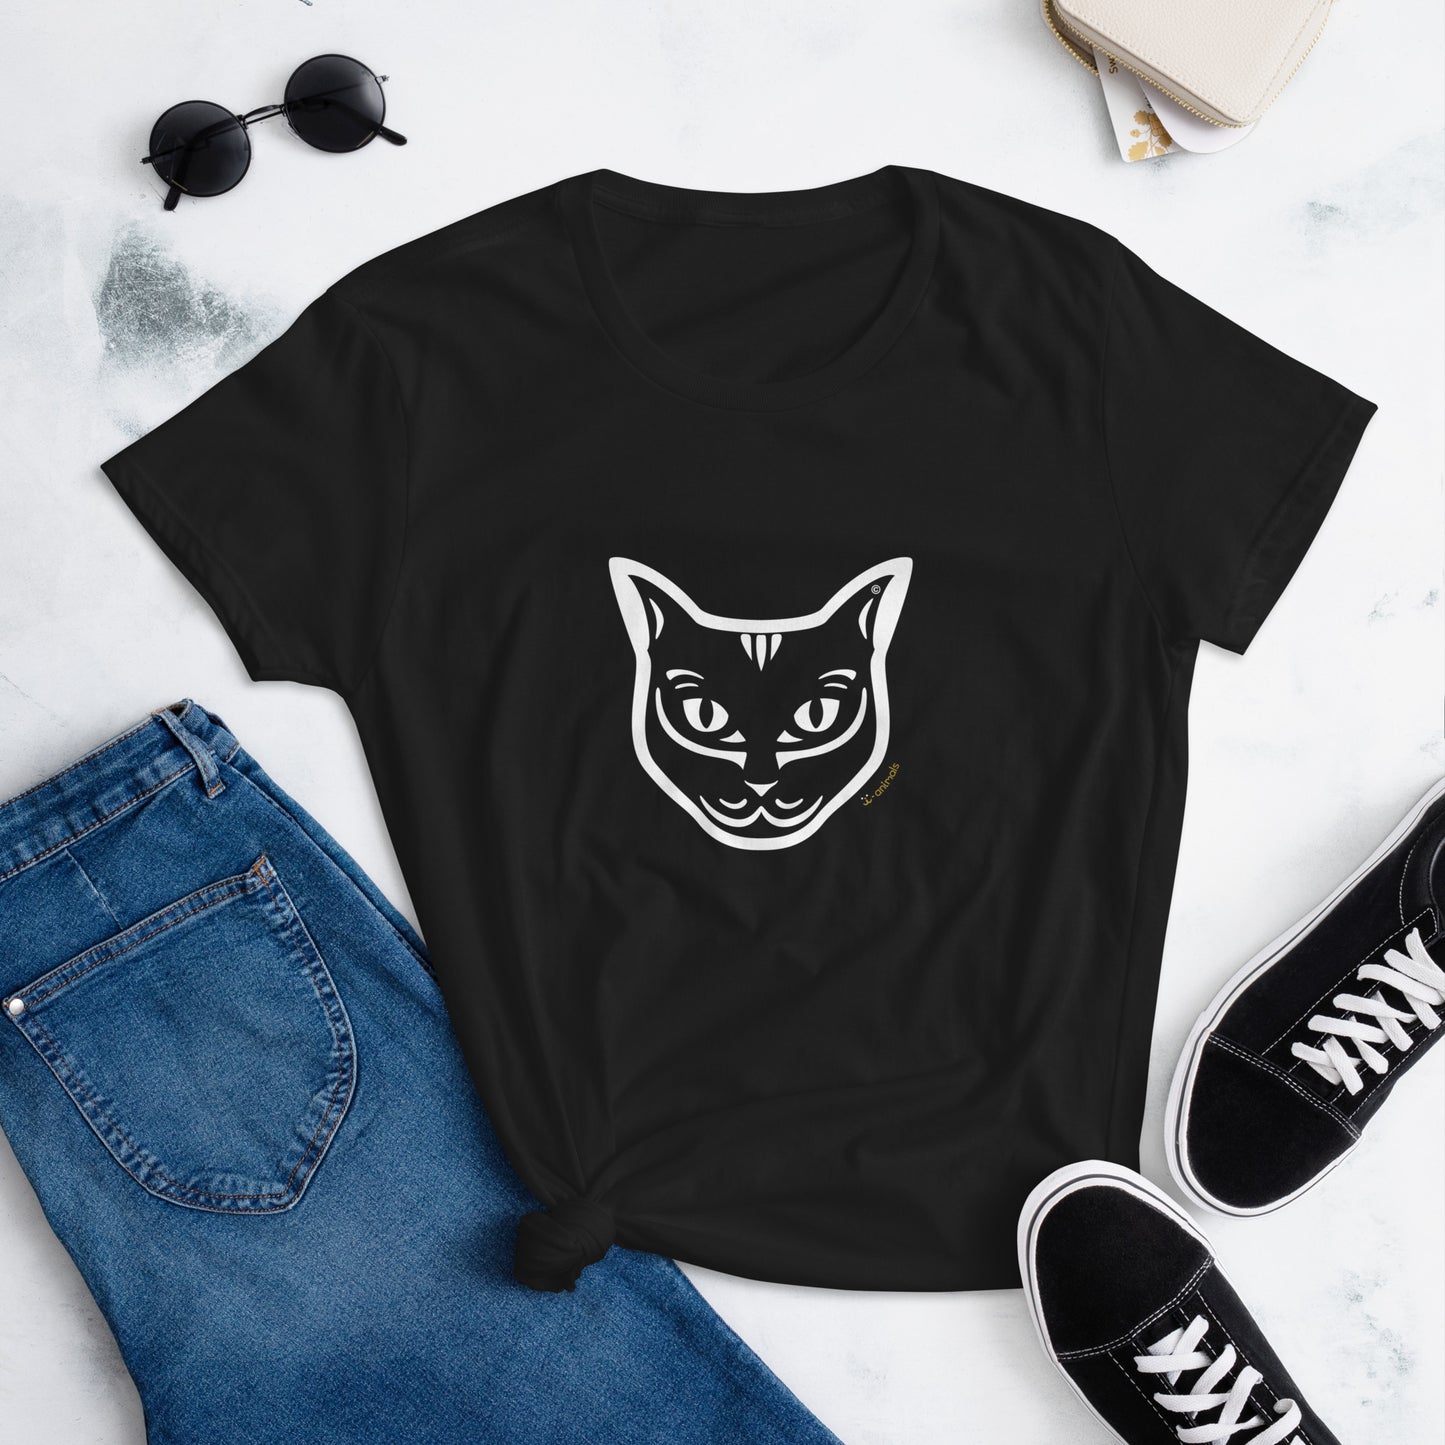 Women's Fashion Fit T-Shirt - Black Cat - Tribal